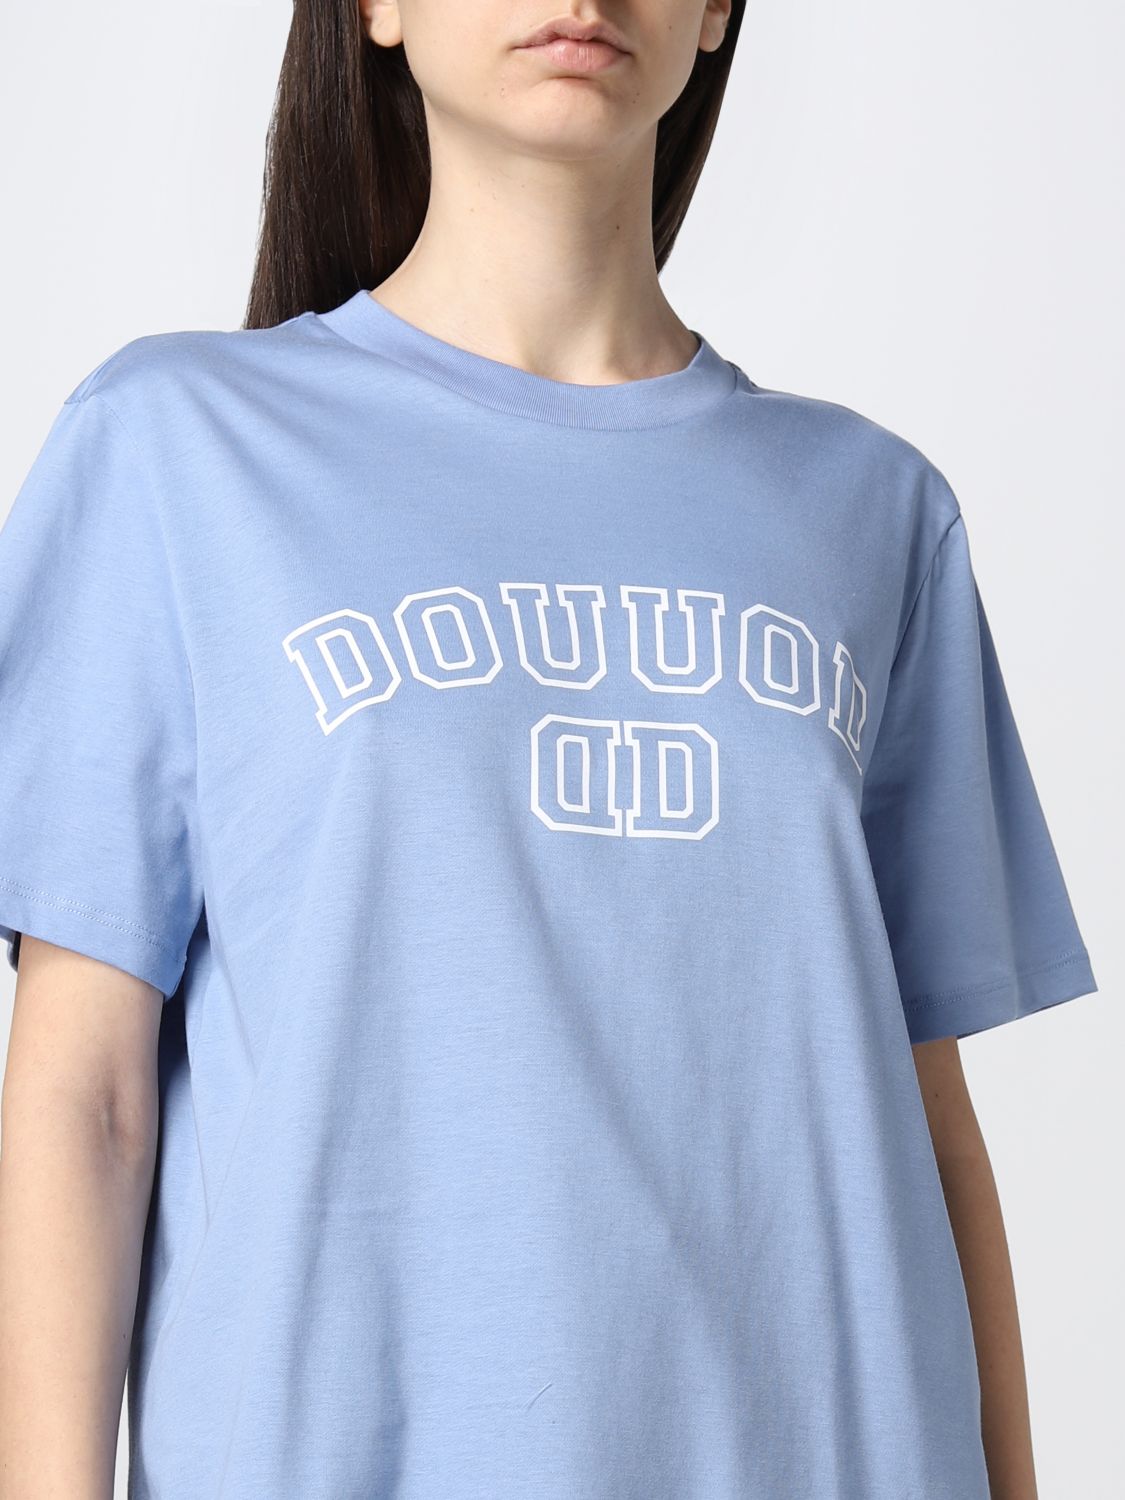 Tシャツ Douuod: Tシャツ Douuod レディース アジュール 3